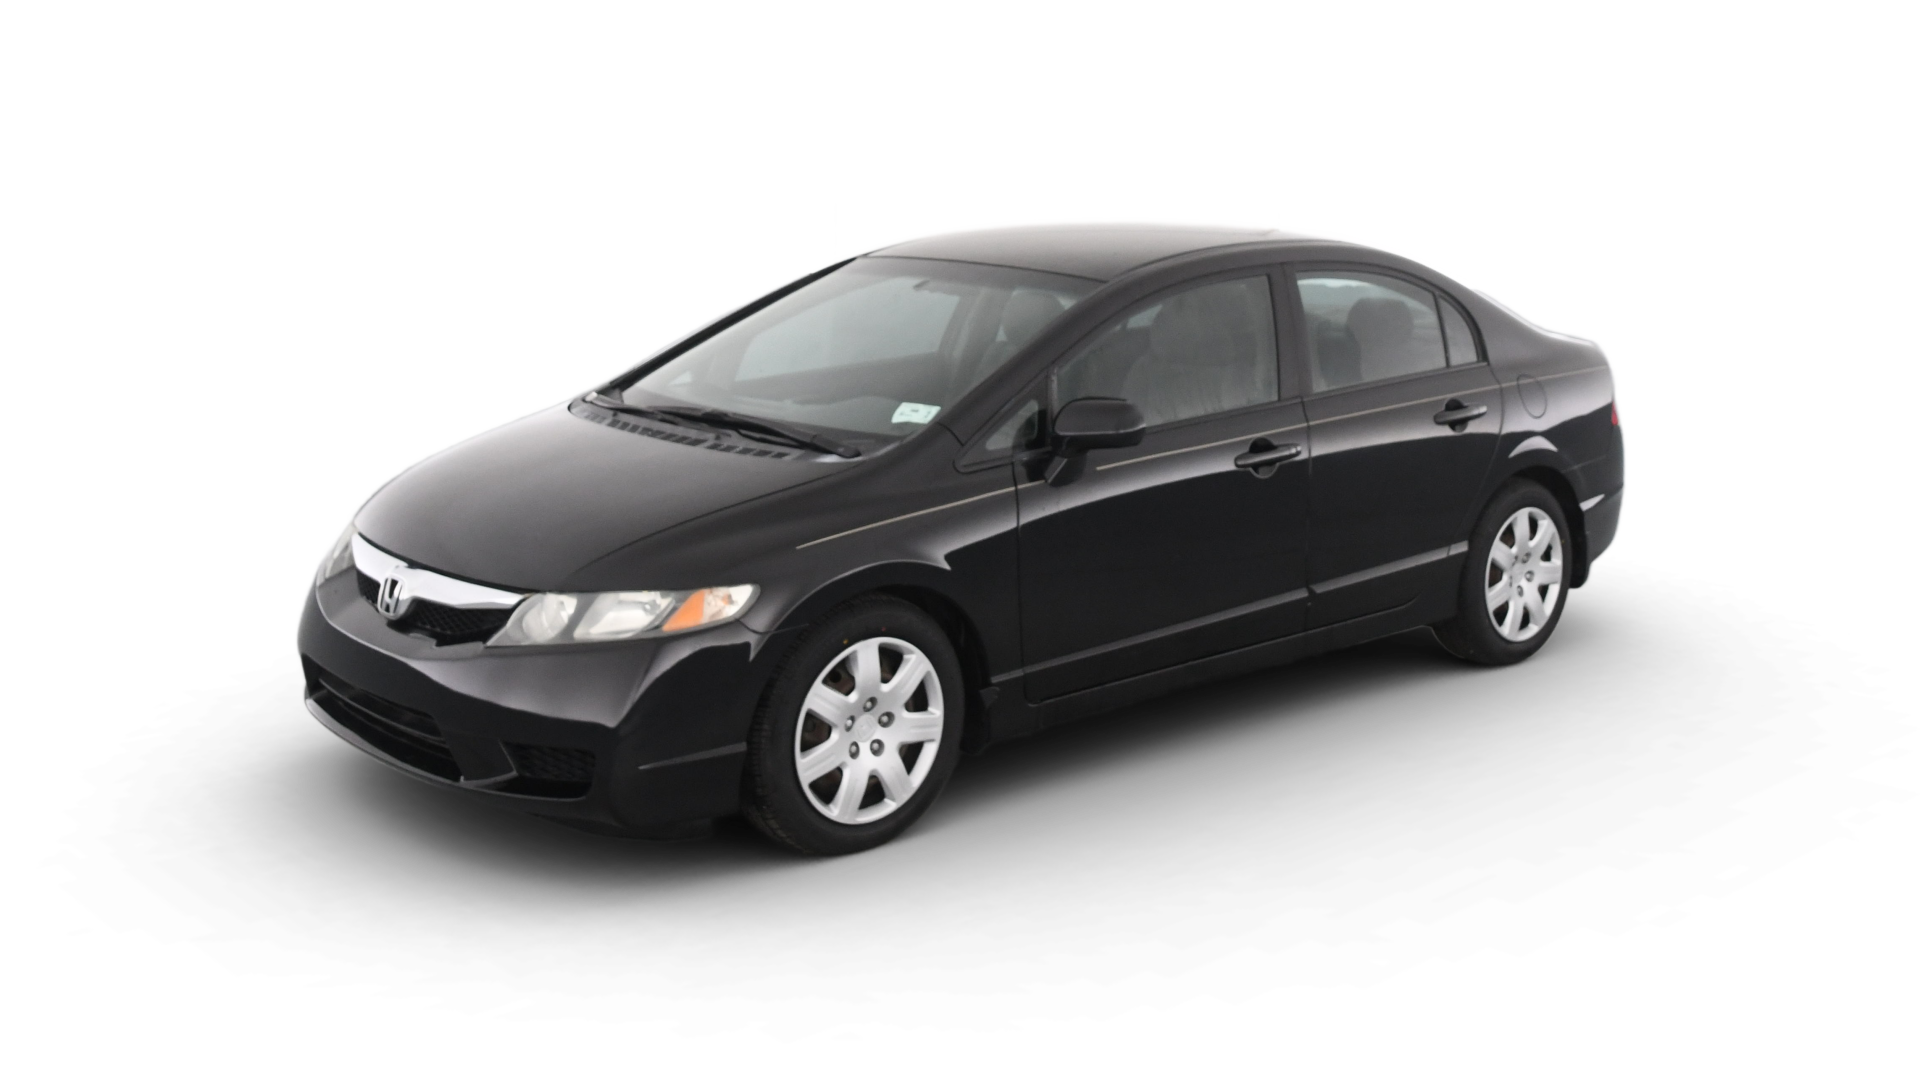 Used Honda Civic For Sale Online | Carvana